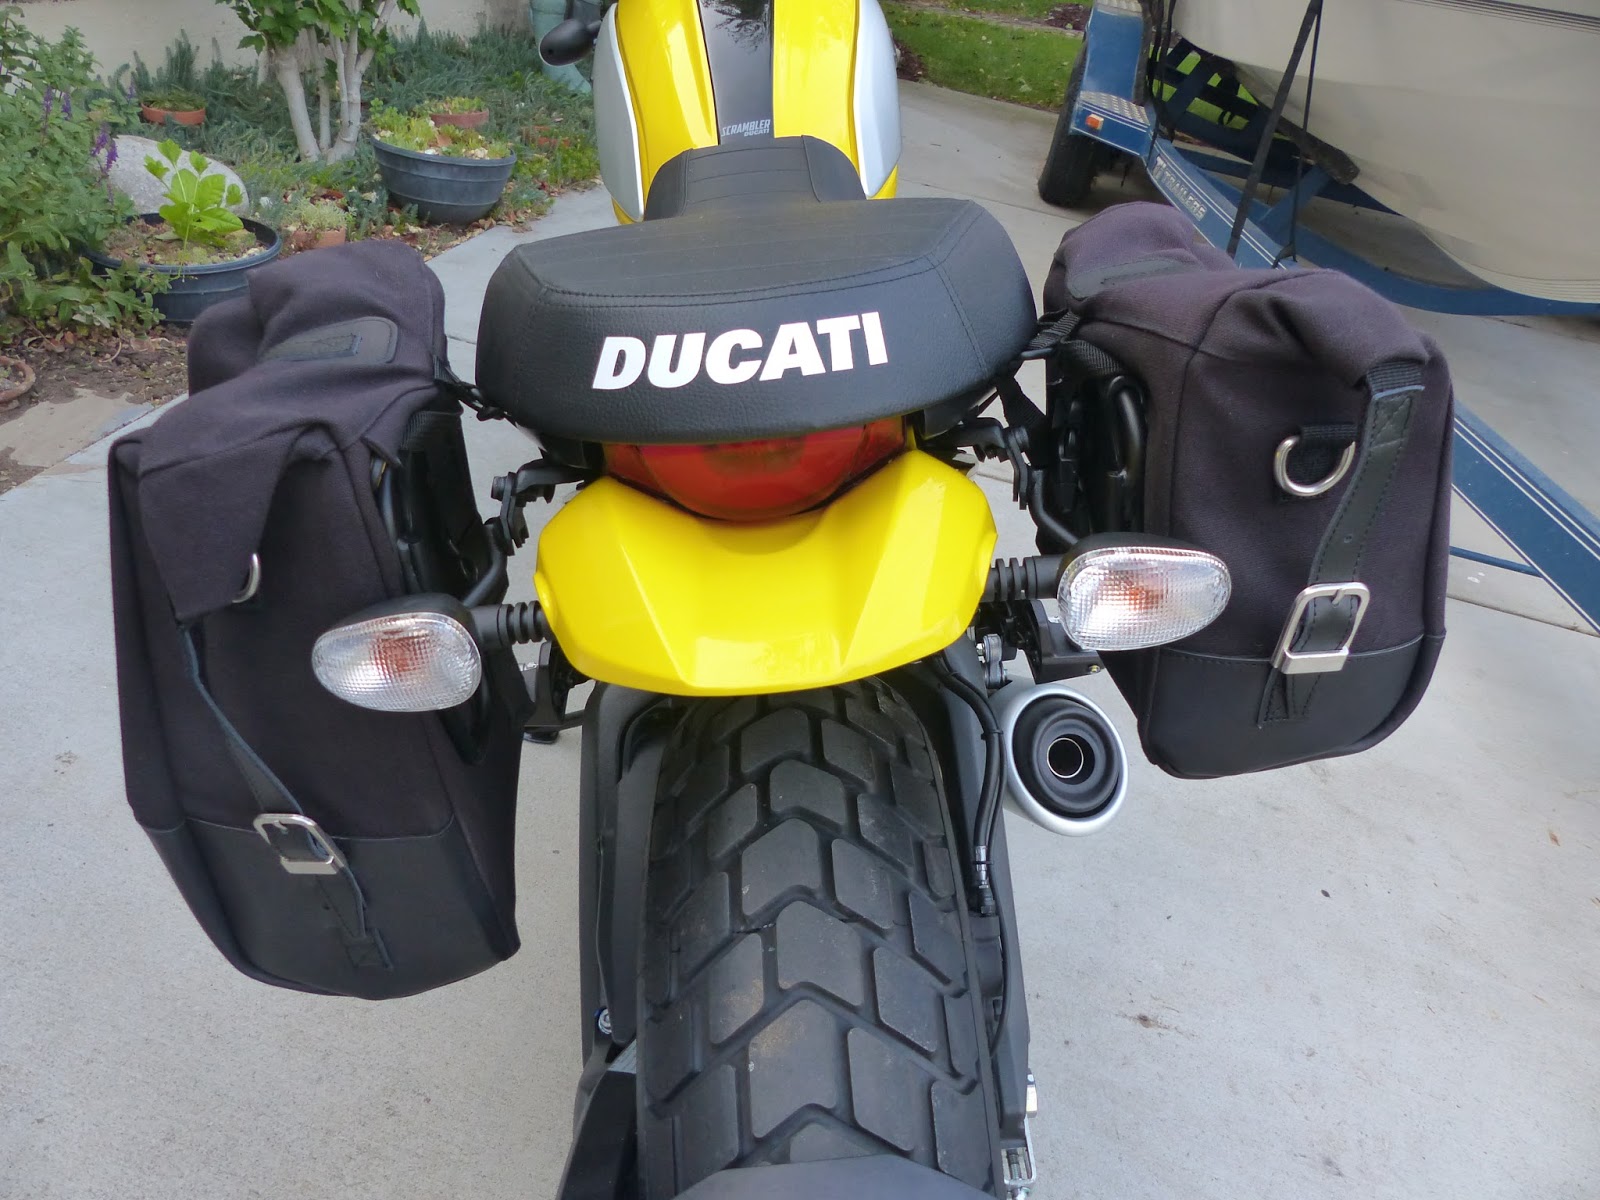 OldMotoDude: New bags installed on 2015 Ducati Scrambler